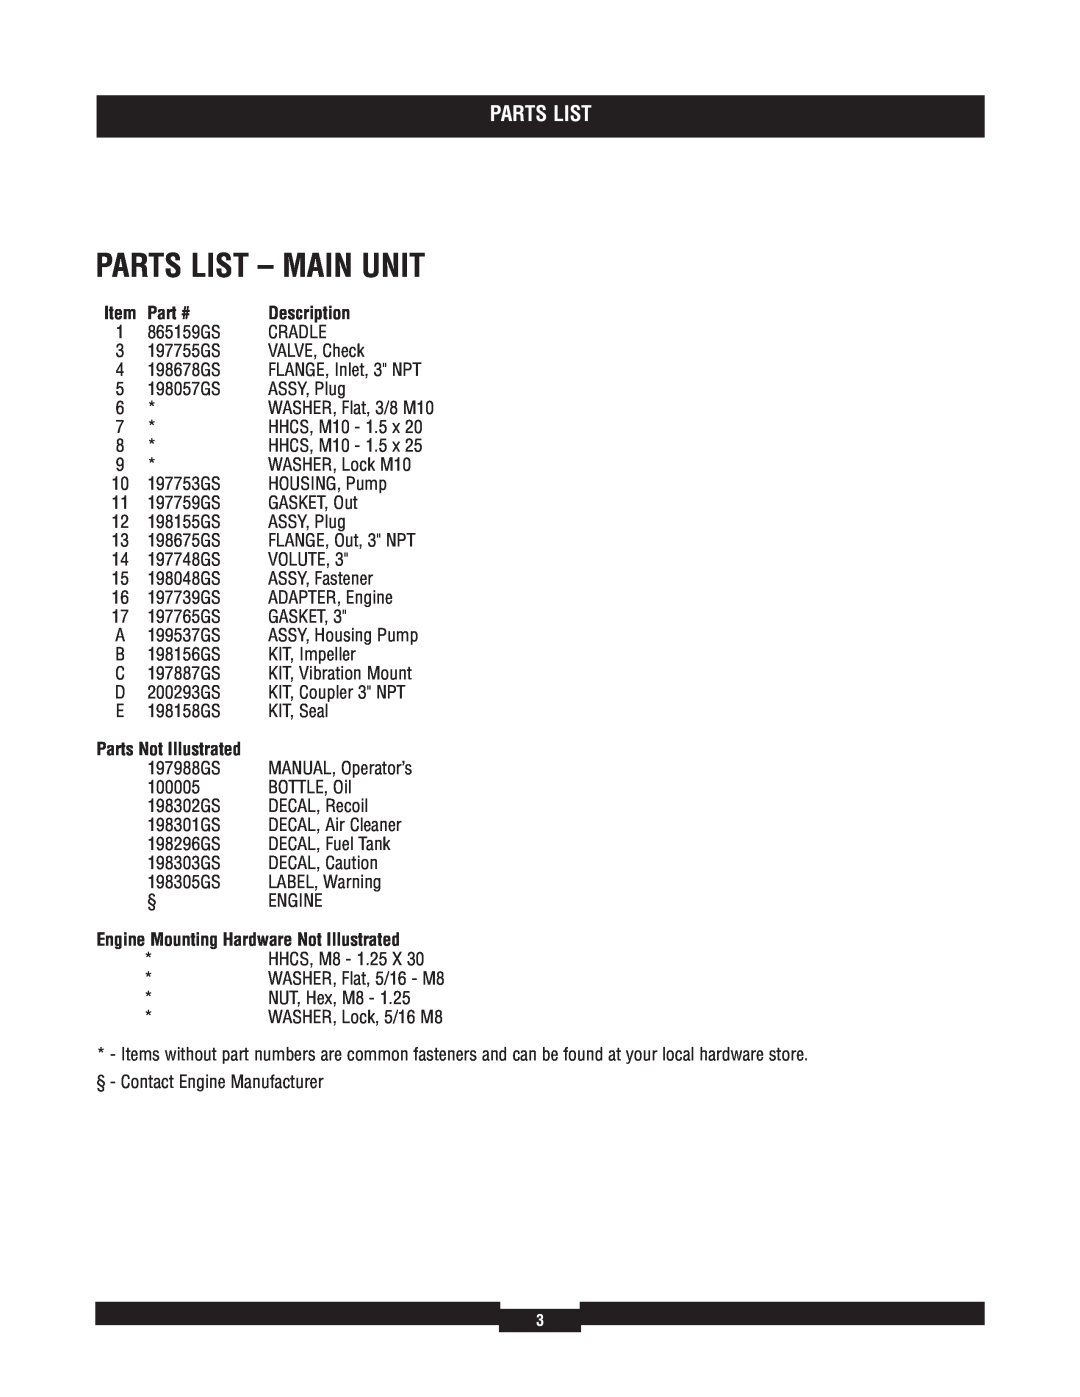 Briggs & Stratton 073003-1 manual Parts List - Main Unit, Description, Parts Not Illustrated 